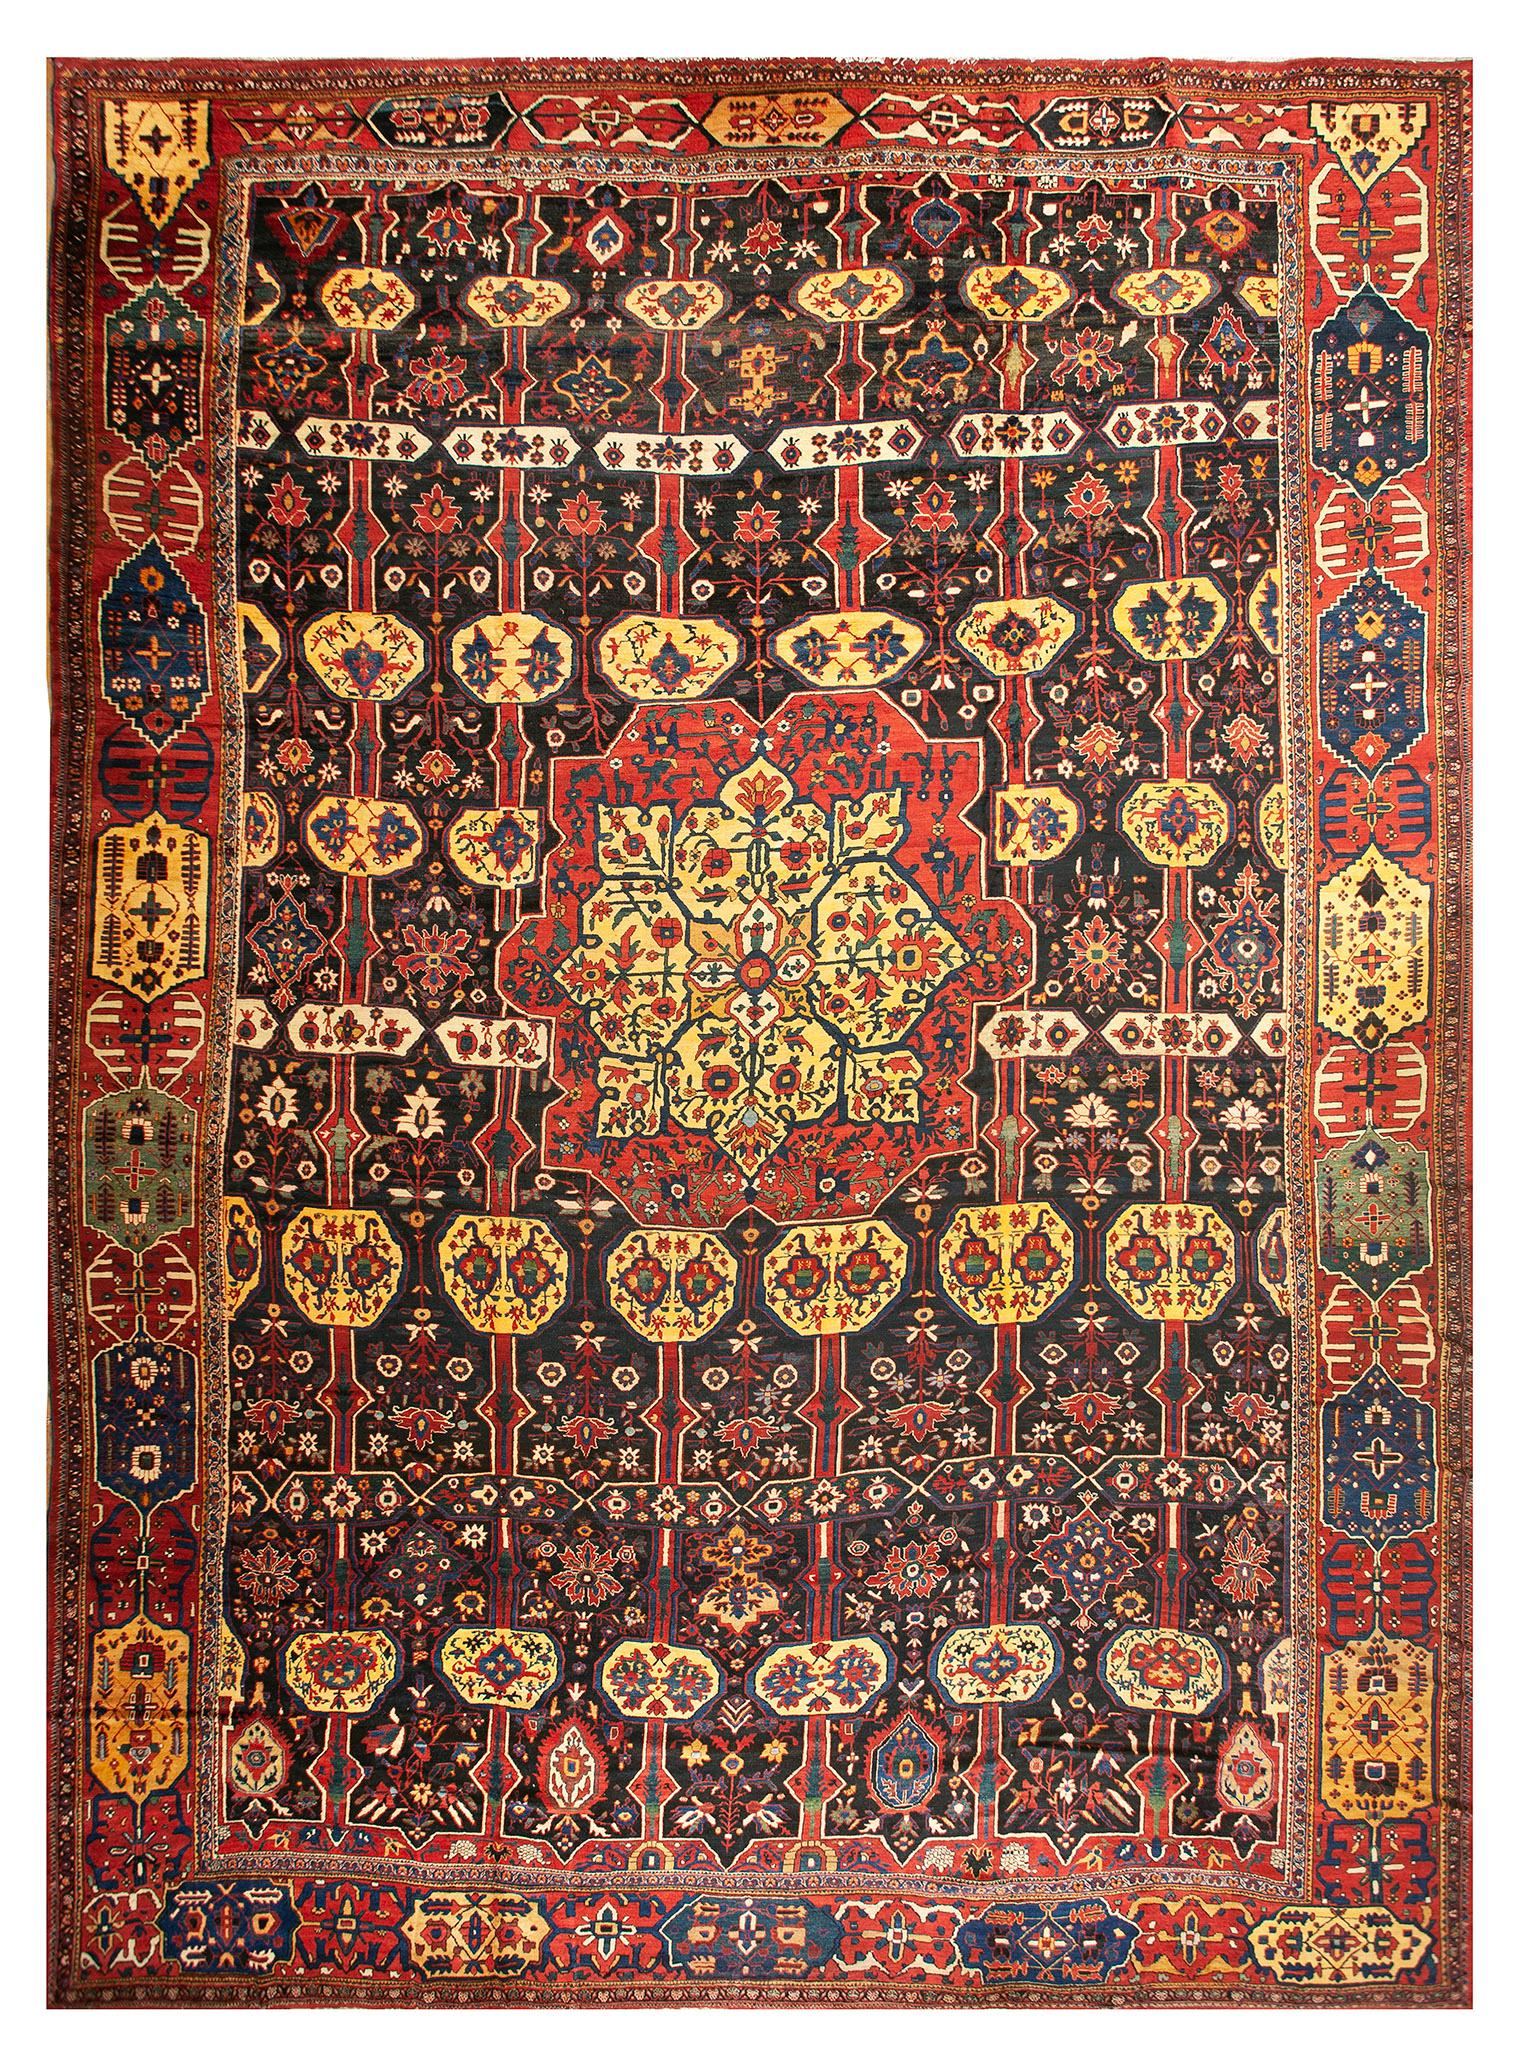 19th Century S. Persian Bakhtiari Carpet ( 15'2" x 21'6" - 462 x 655 ) For Sale